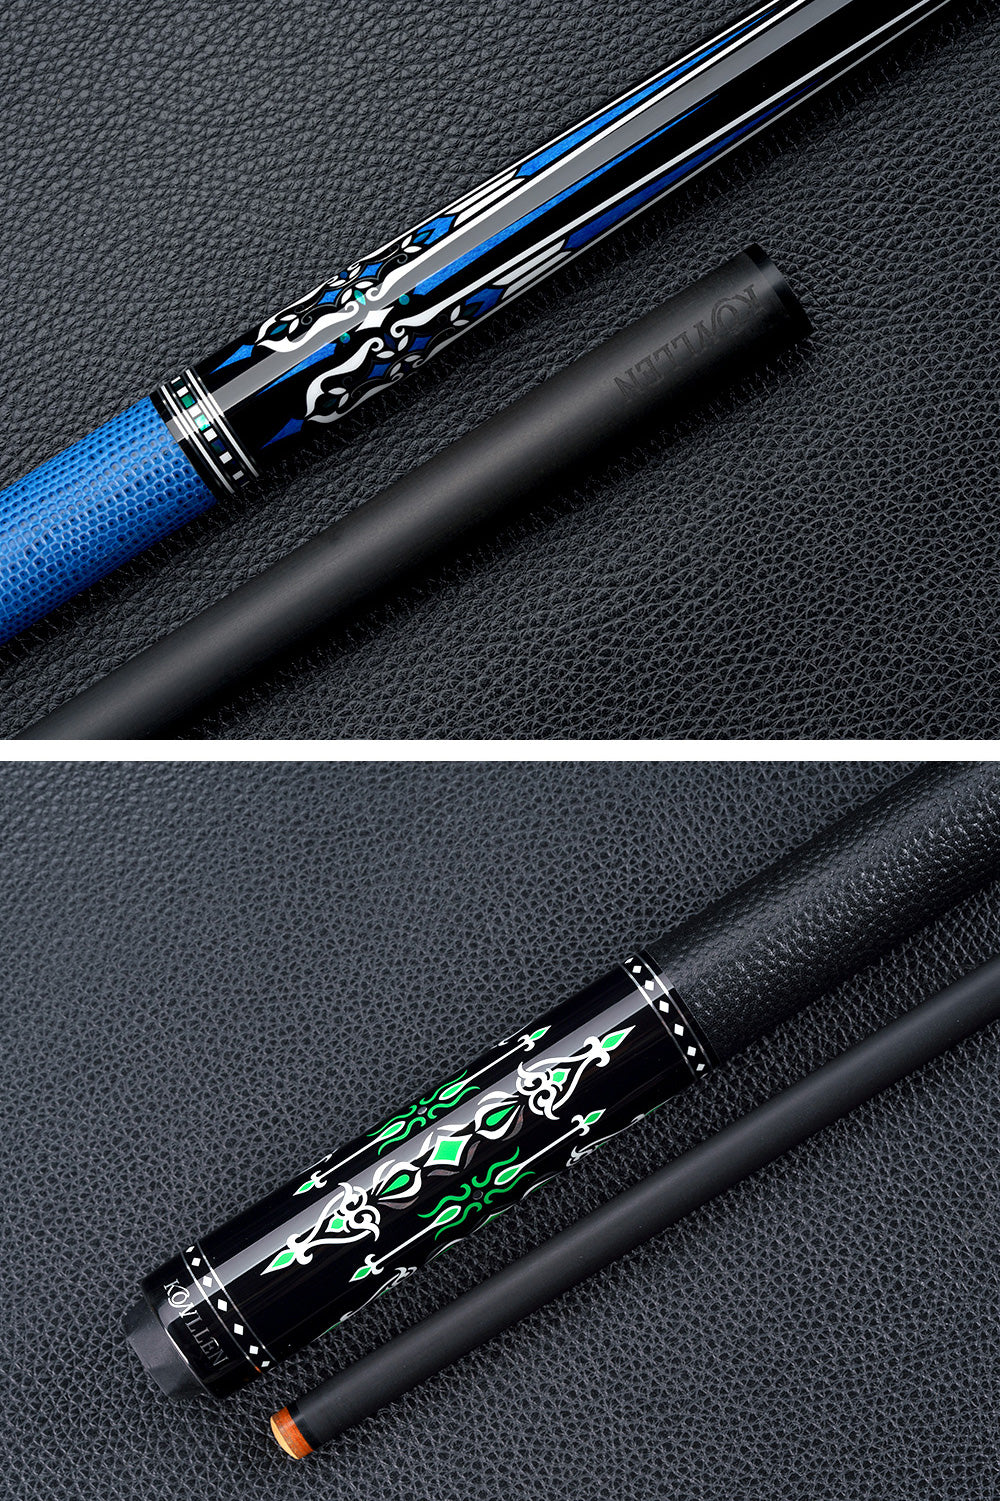 KONLLEN Carbon Fiber Pool Cue Stick, 12.5mm Tip, 3*8 Joint Pin, Professional Taper, Low Deflection Billard